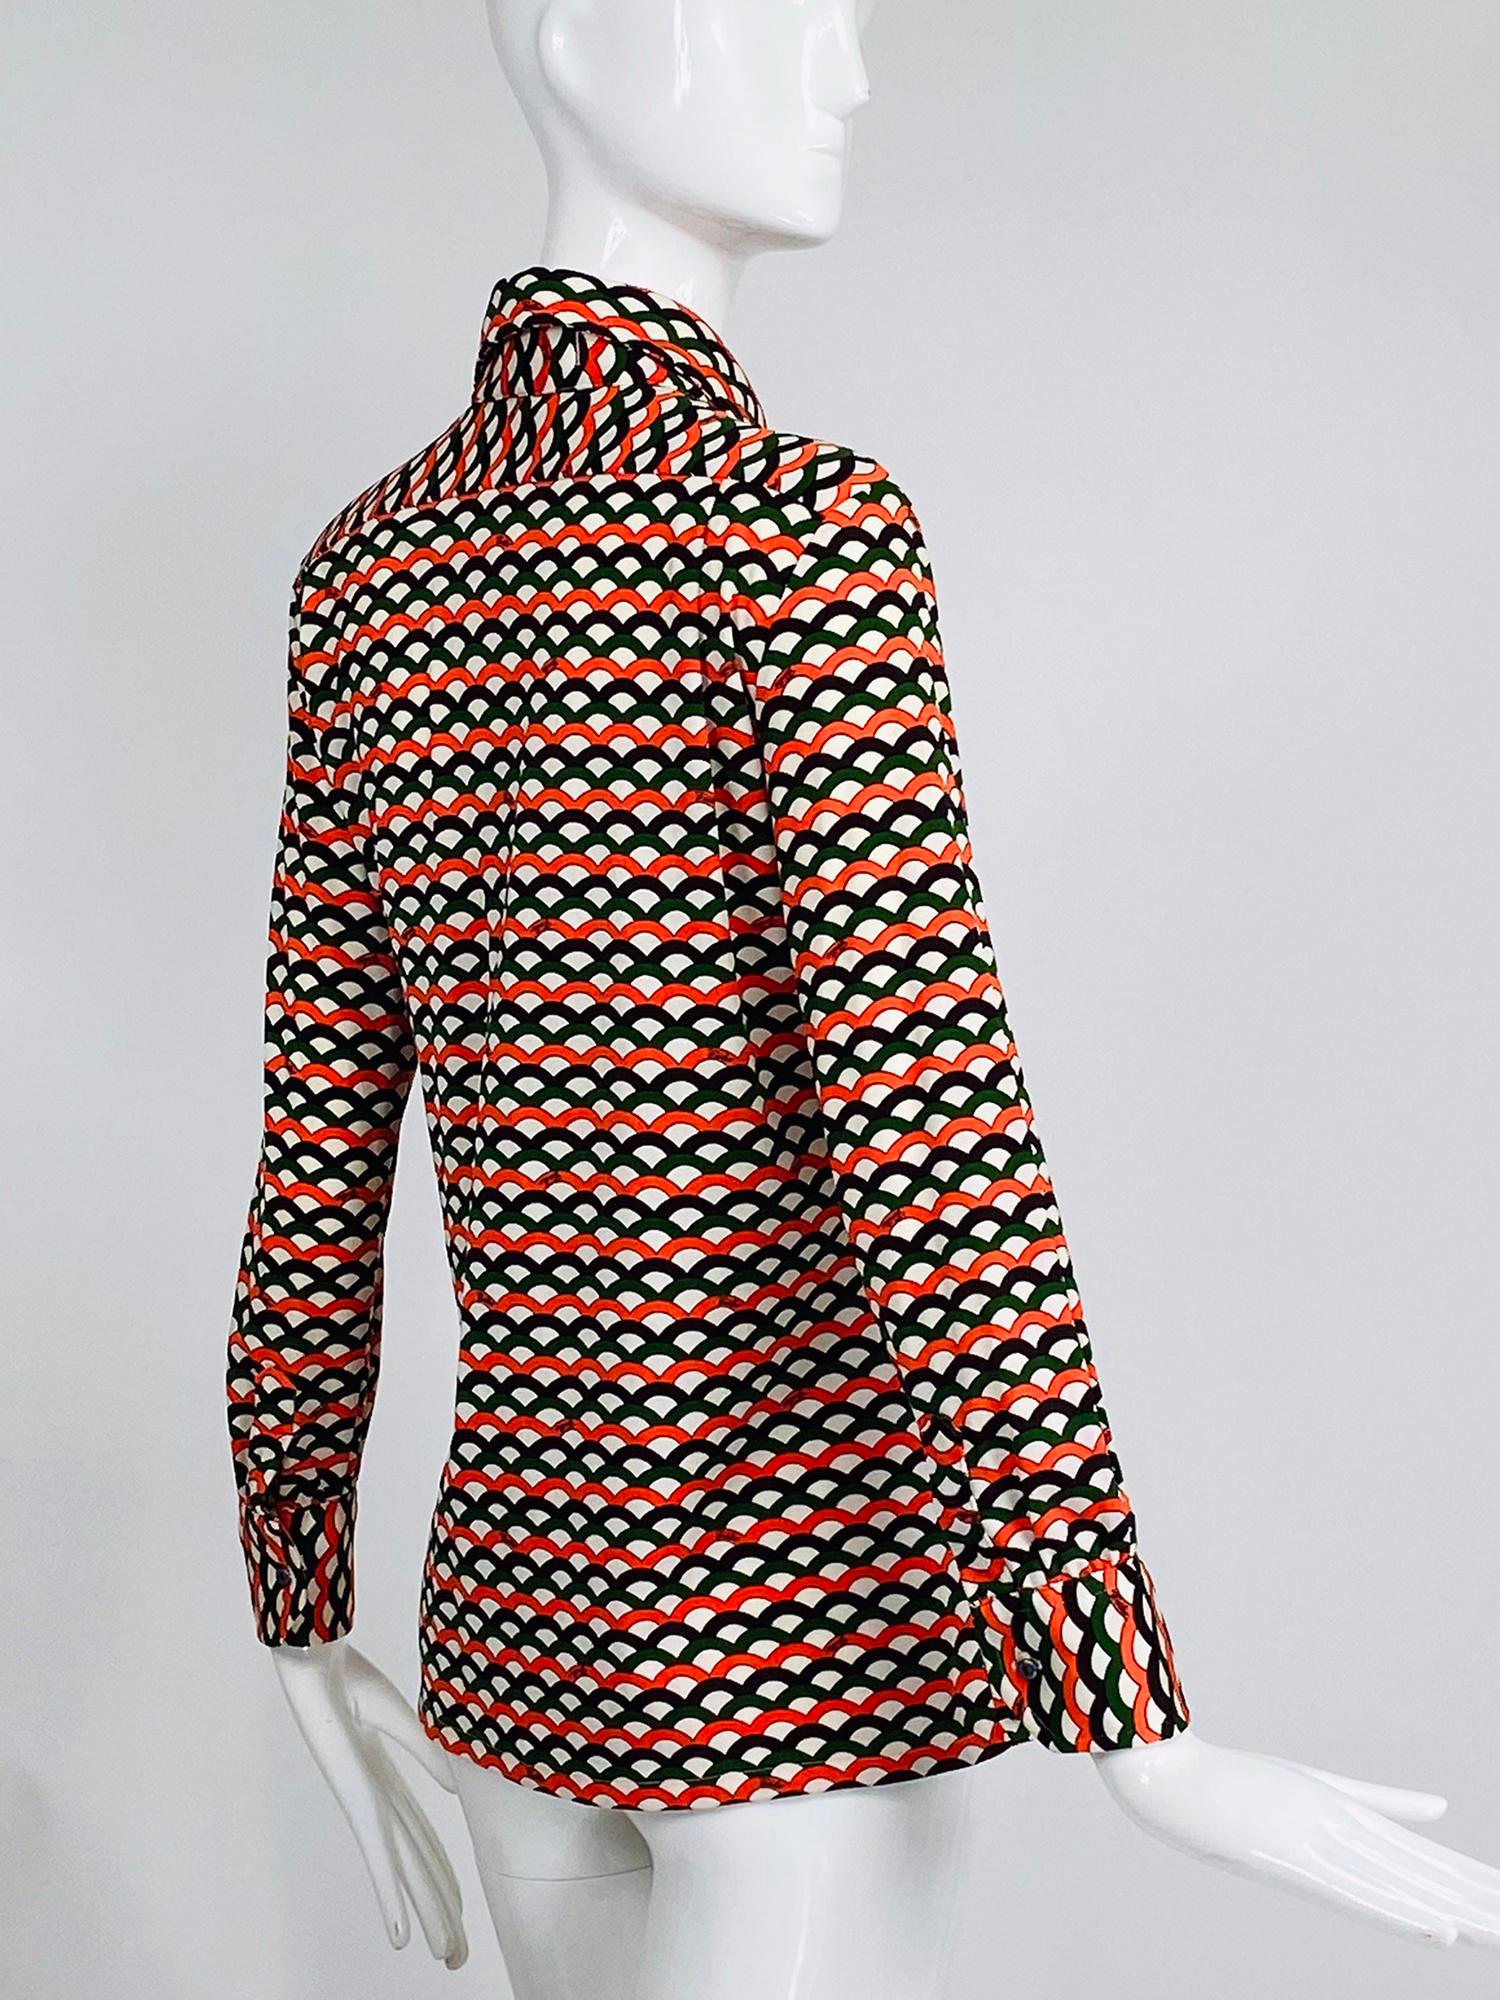 Emilio Pucci Signed Geometric Print Shirt 1970s 1